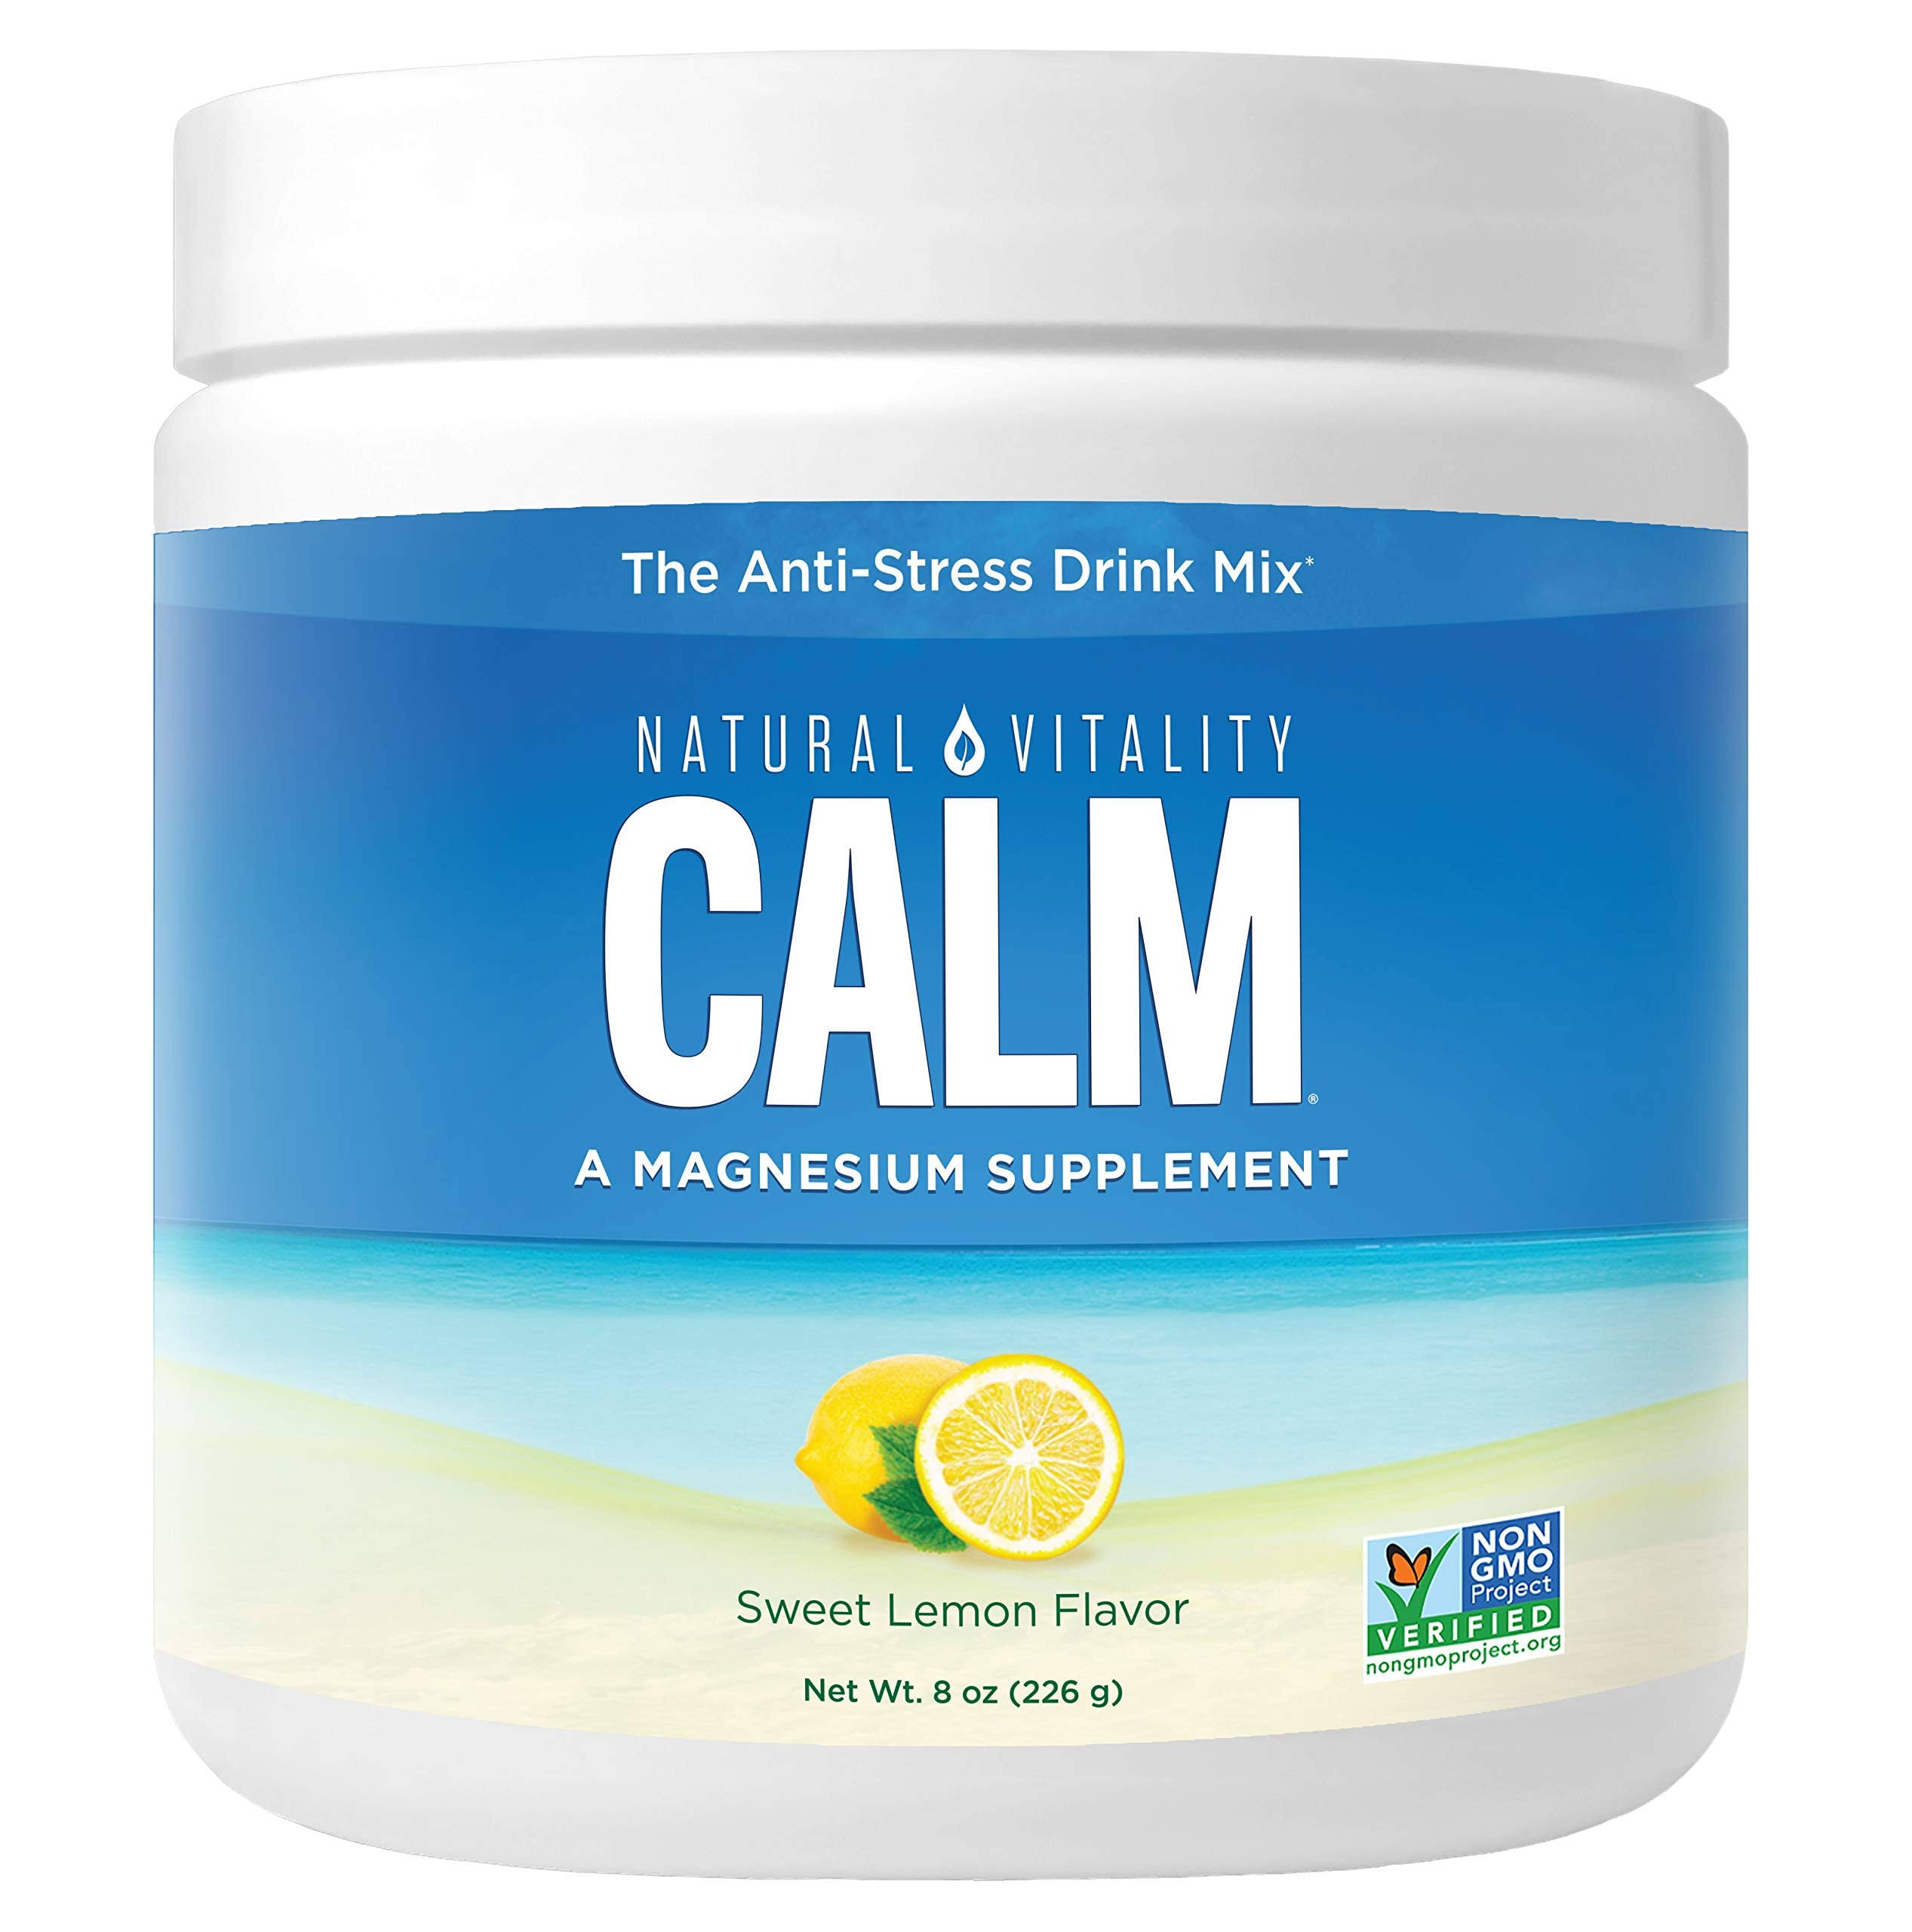 Natural Vitality Calm The Anti-stress Drink Mix Sweet Lemon Flavor 8 oz (226 g)